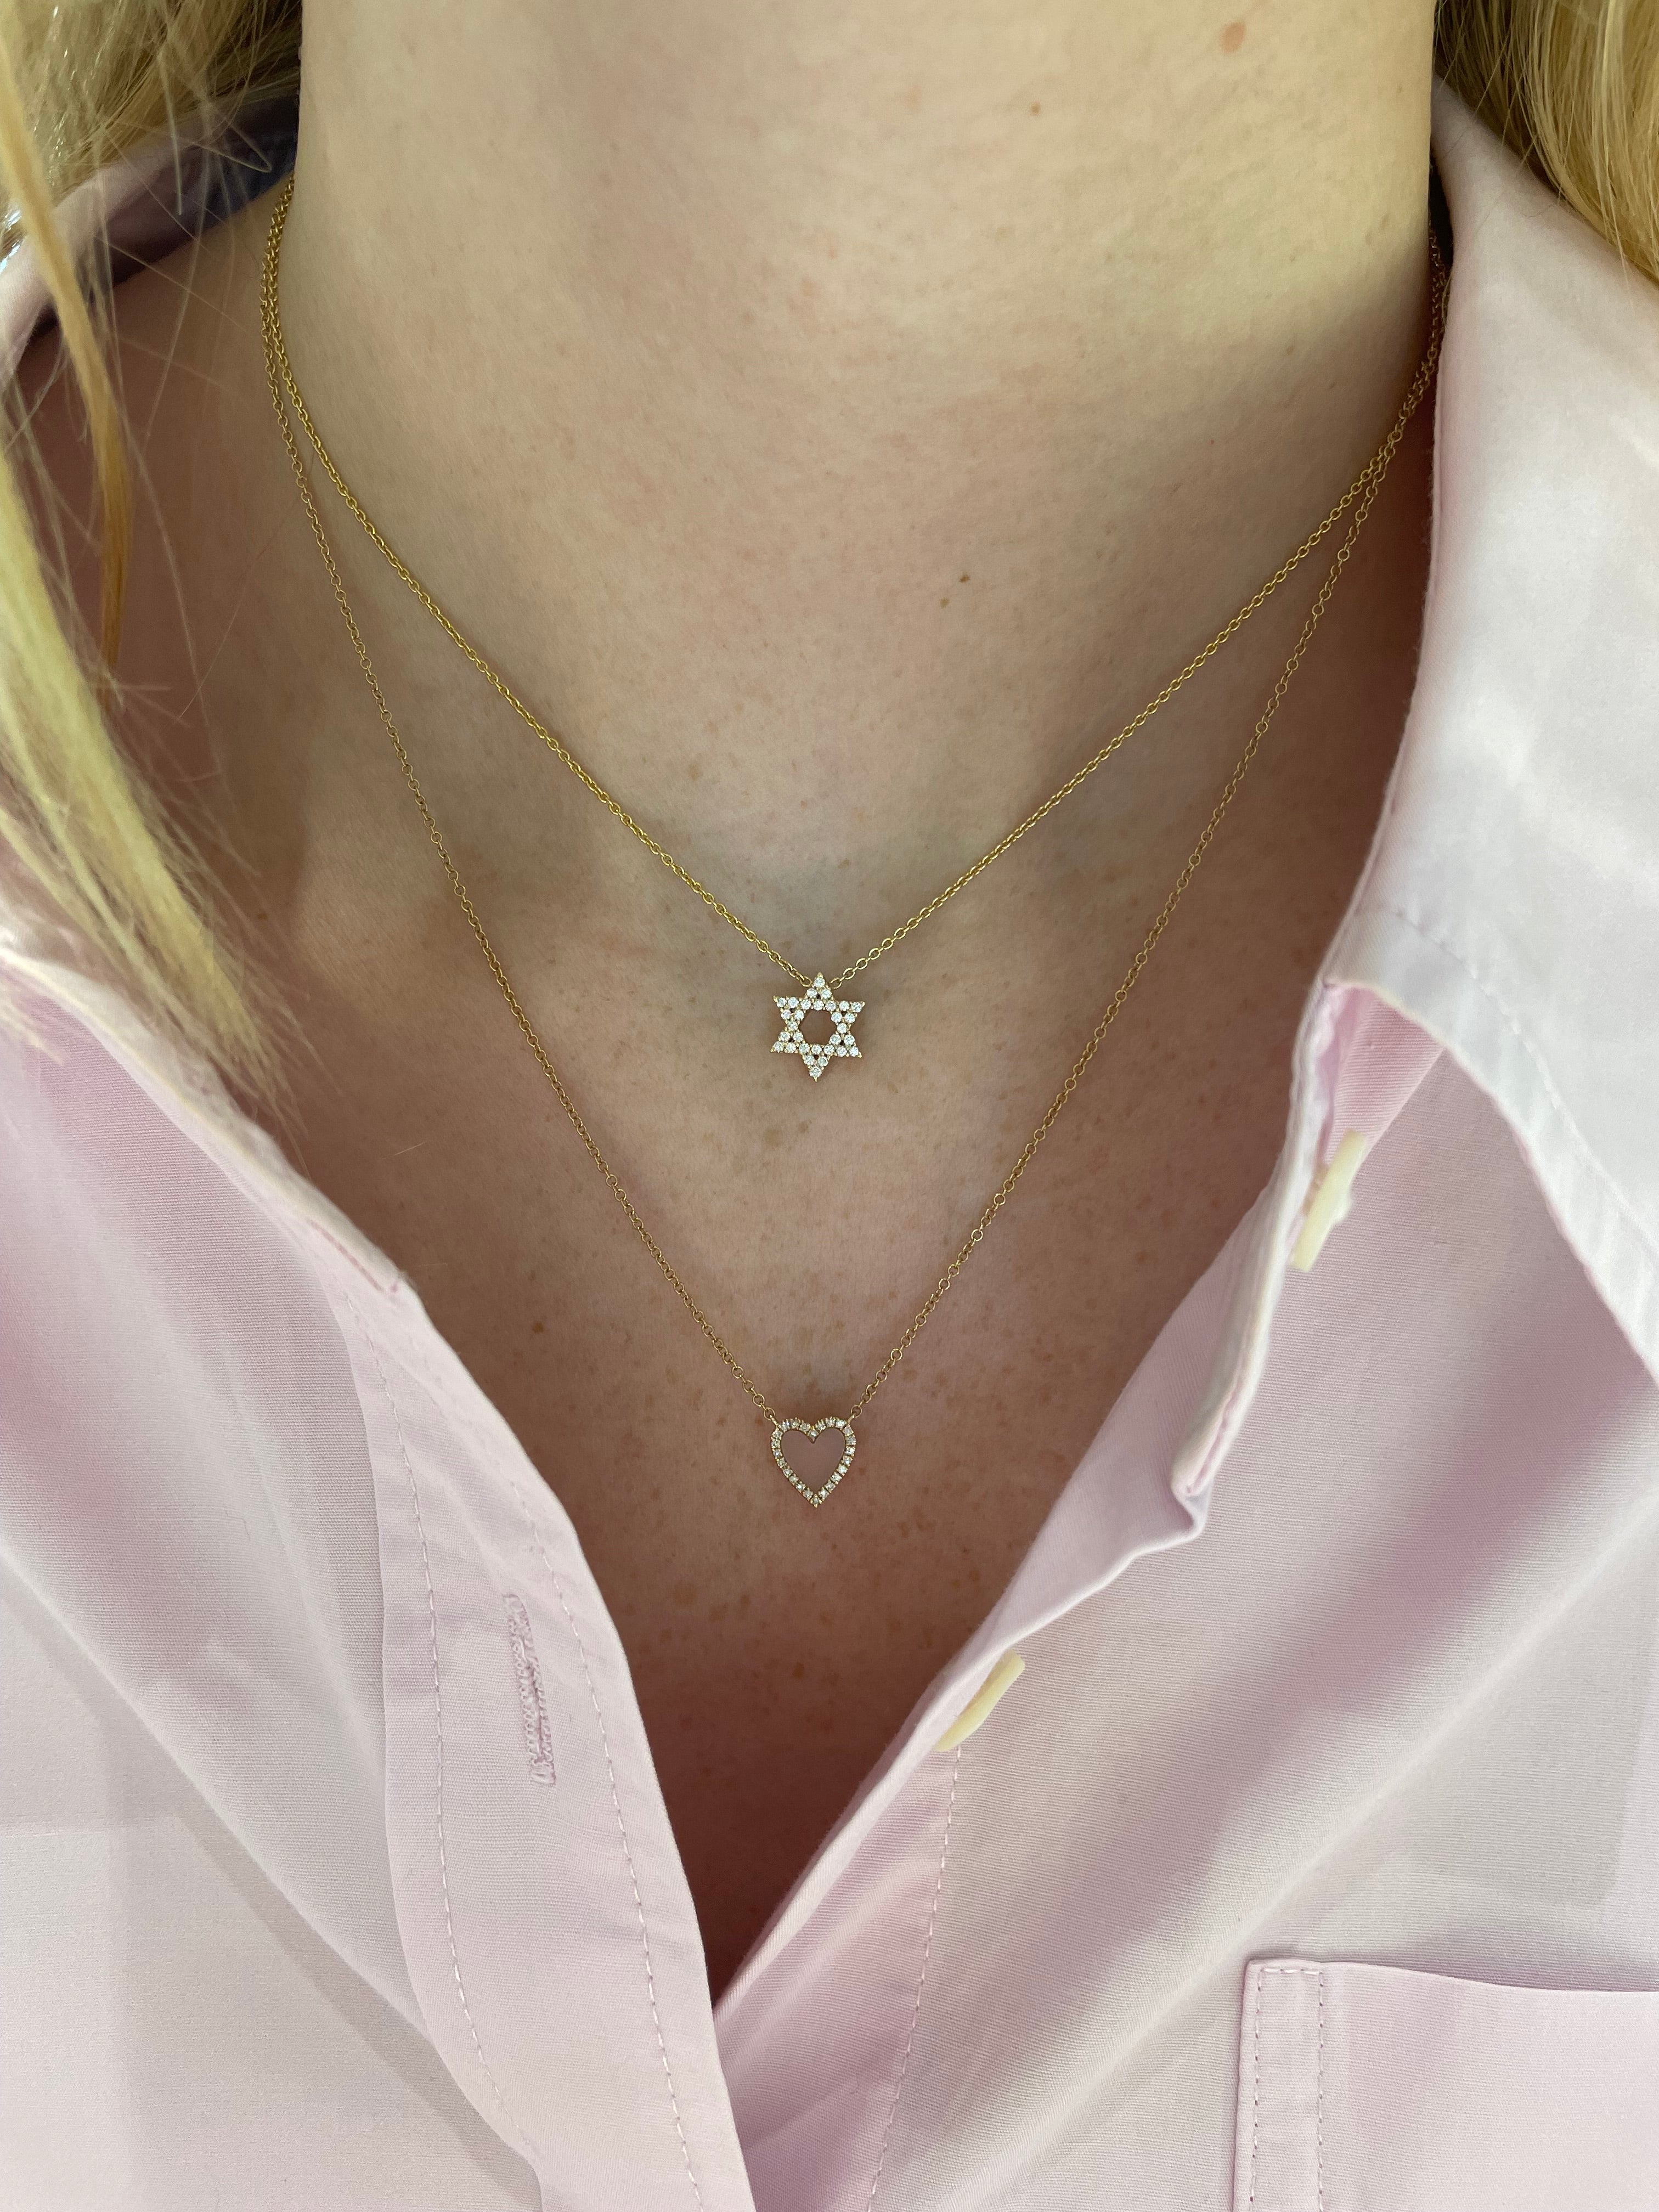 Mini Pink Opal Diamond Border Heart Necklace